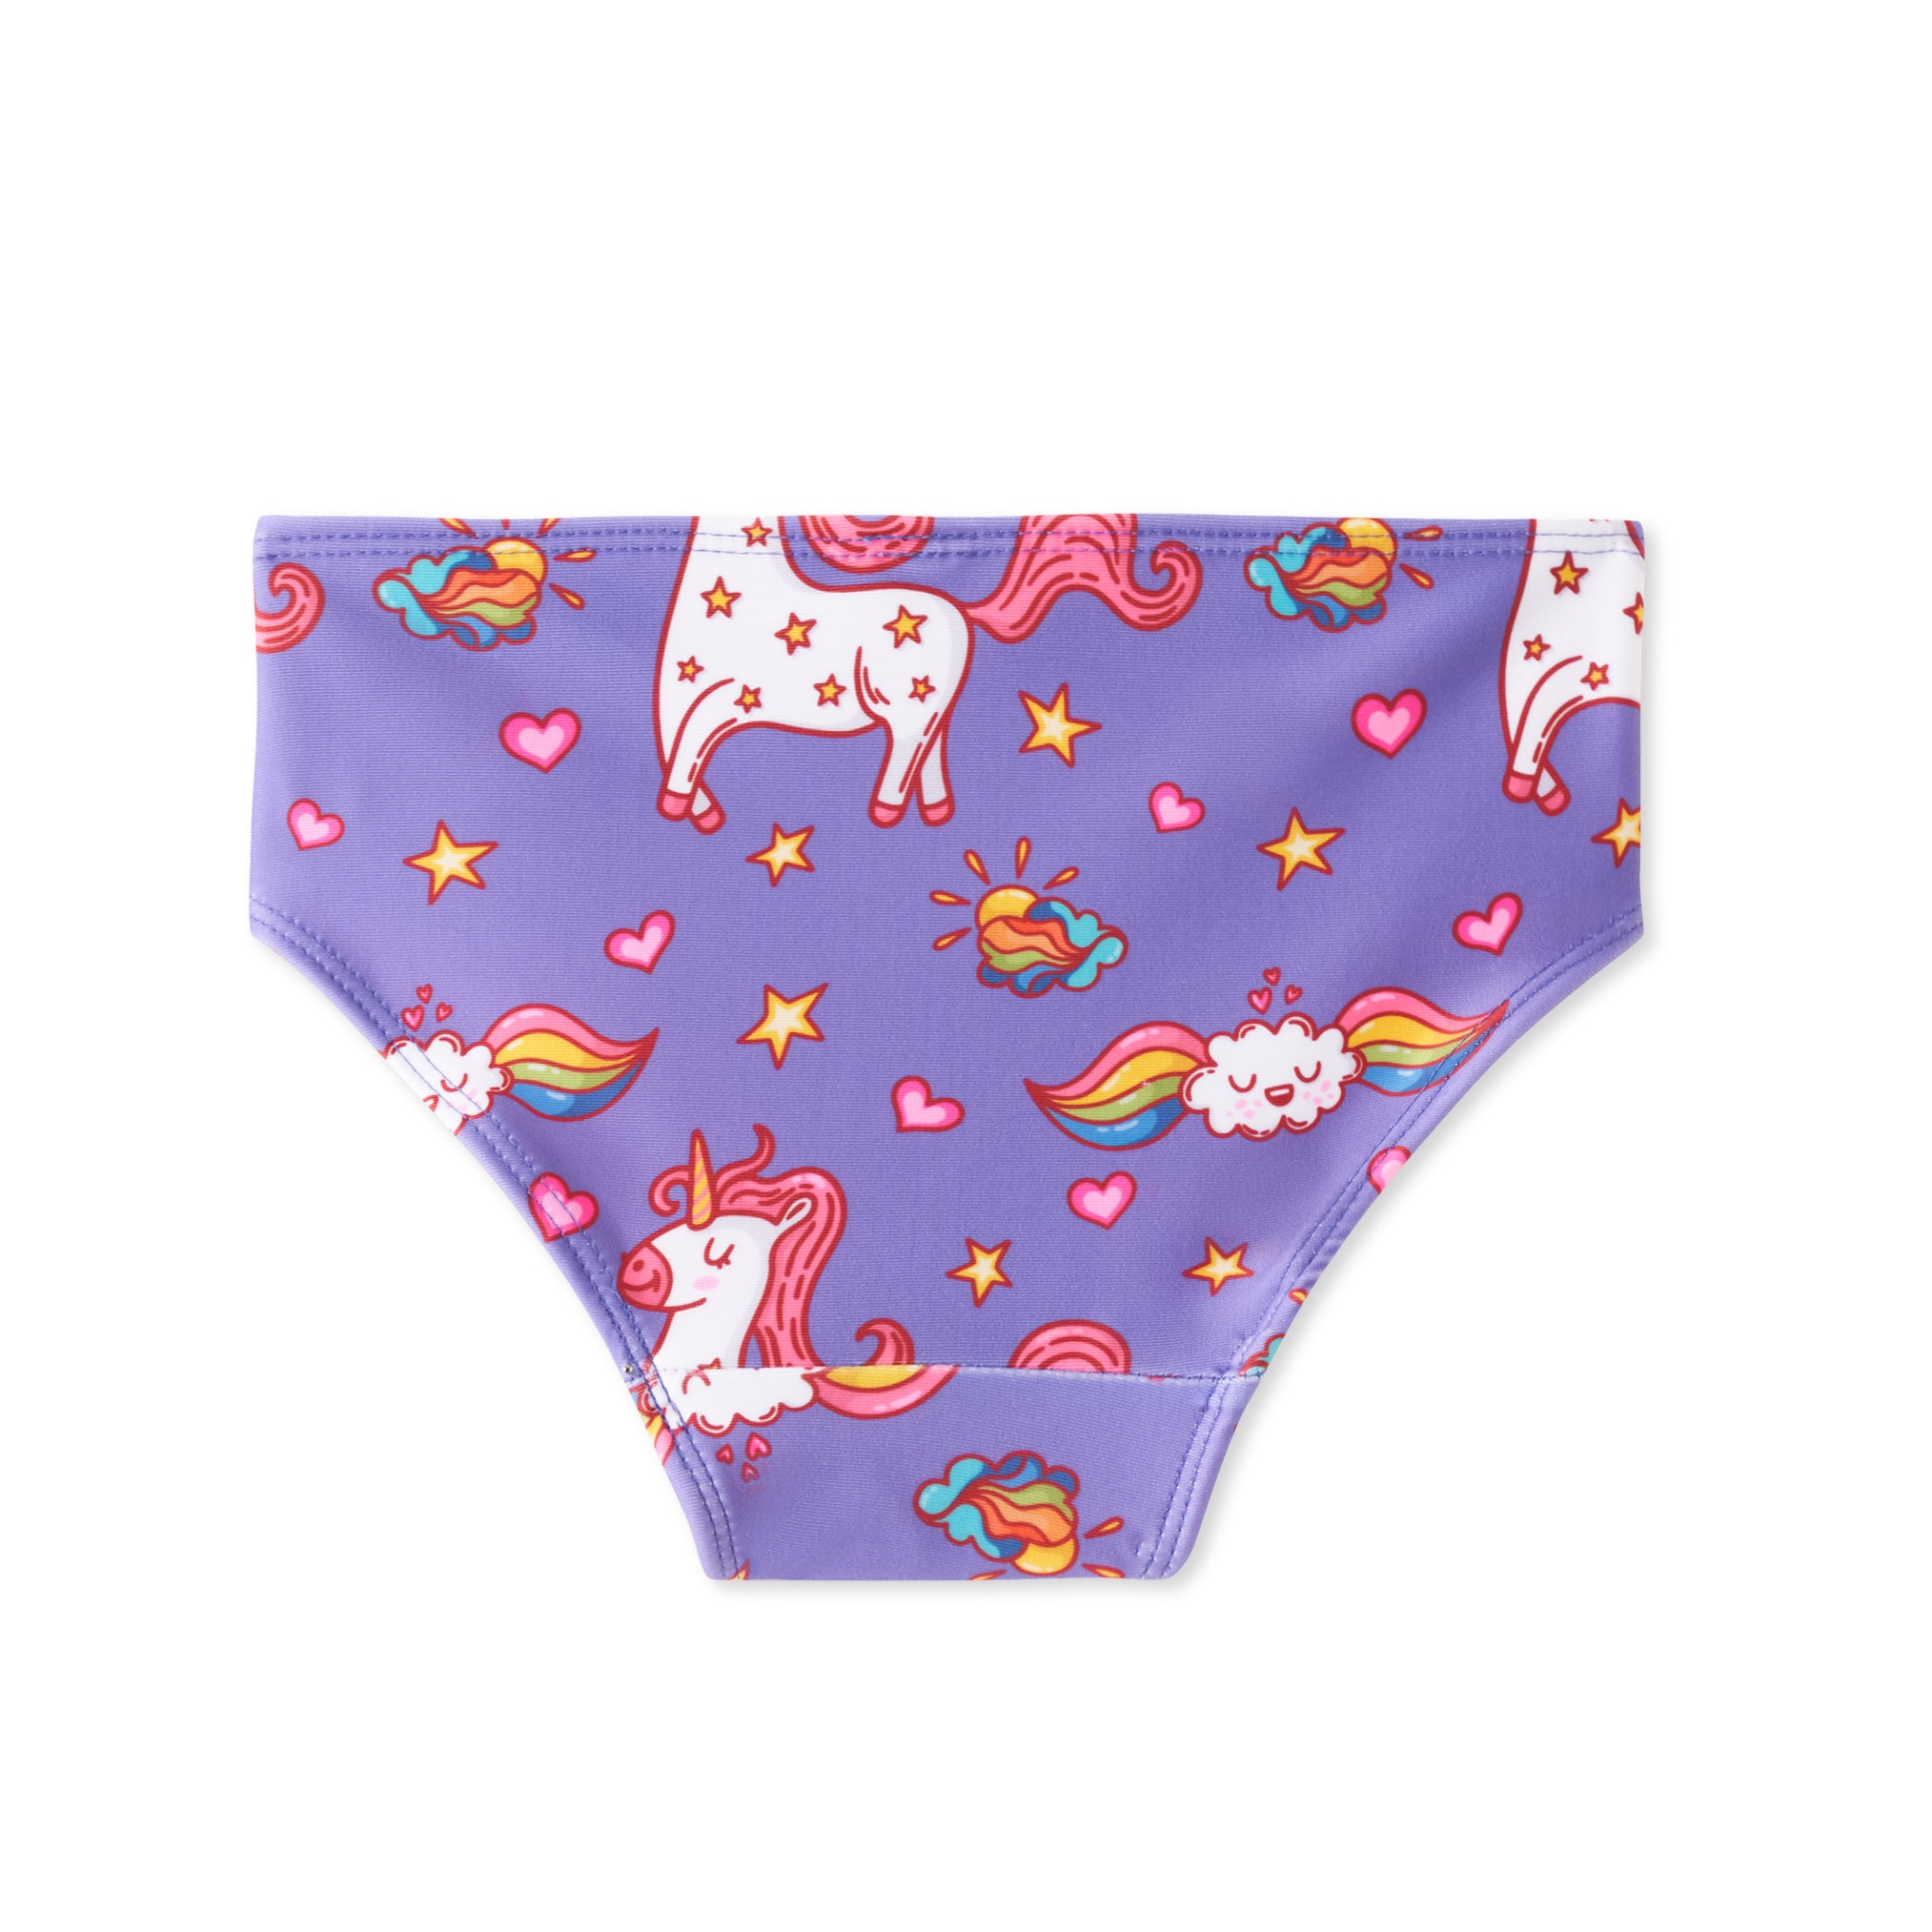 The Childrens Place Girls Underwear, 7 Pack Unicorn Panties Sizes 4 - 16